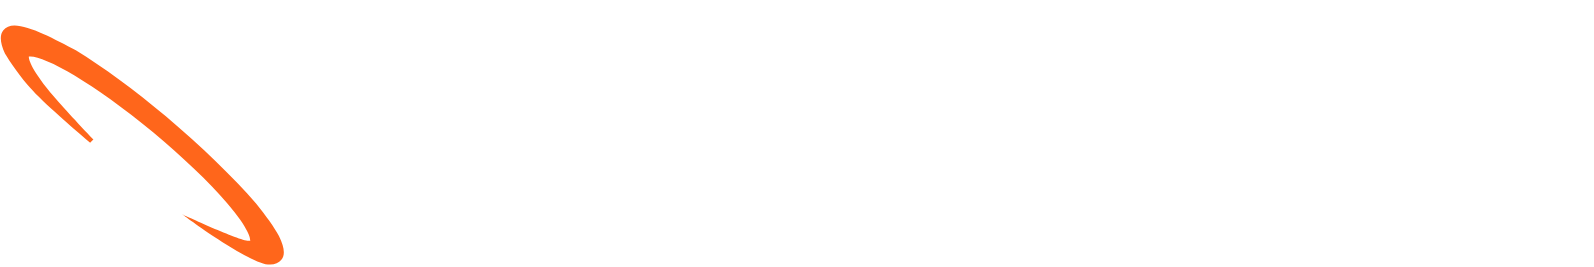 908 Devices Logo groß für dunkle Hintergründe (transparentes PNG)